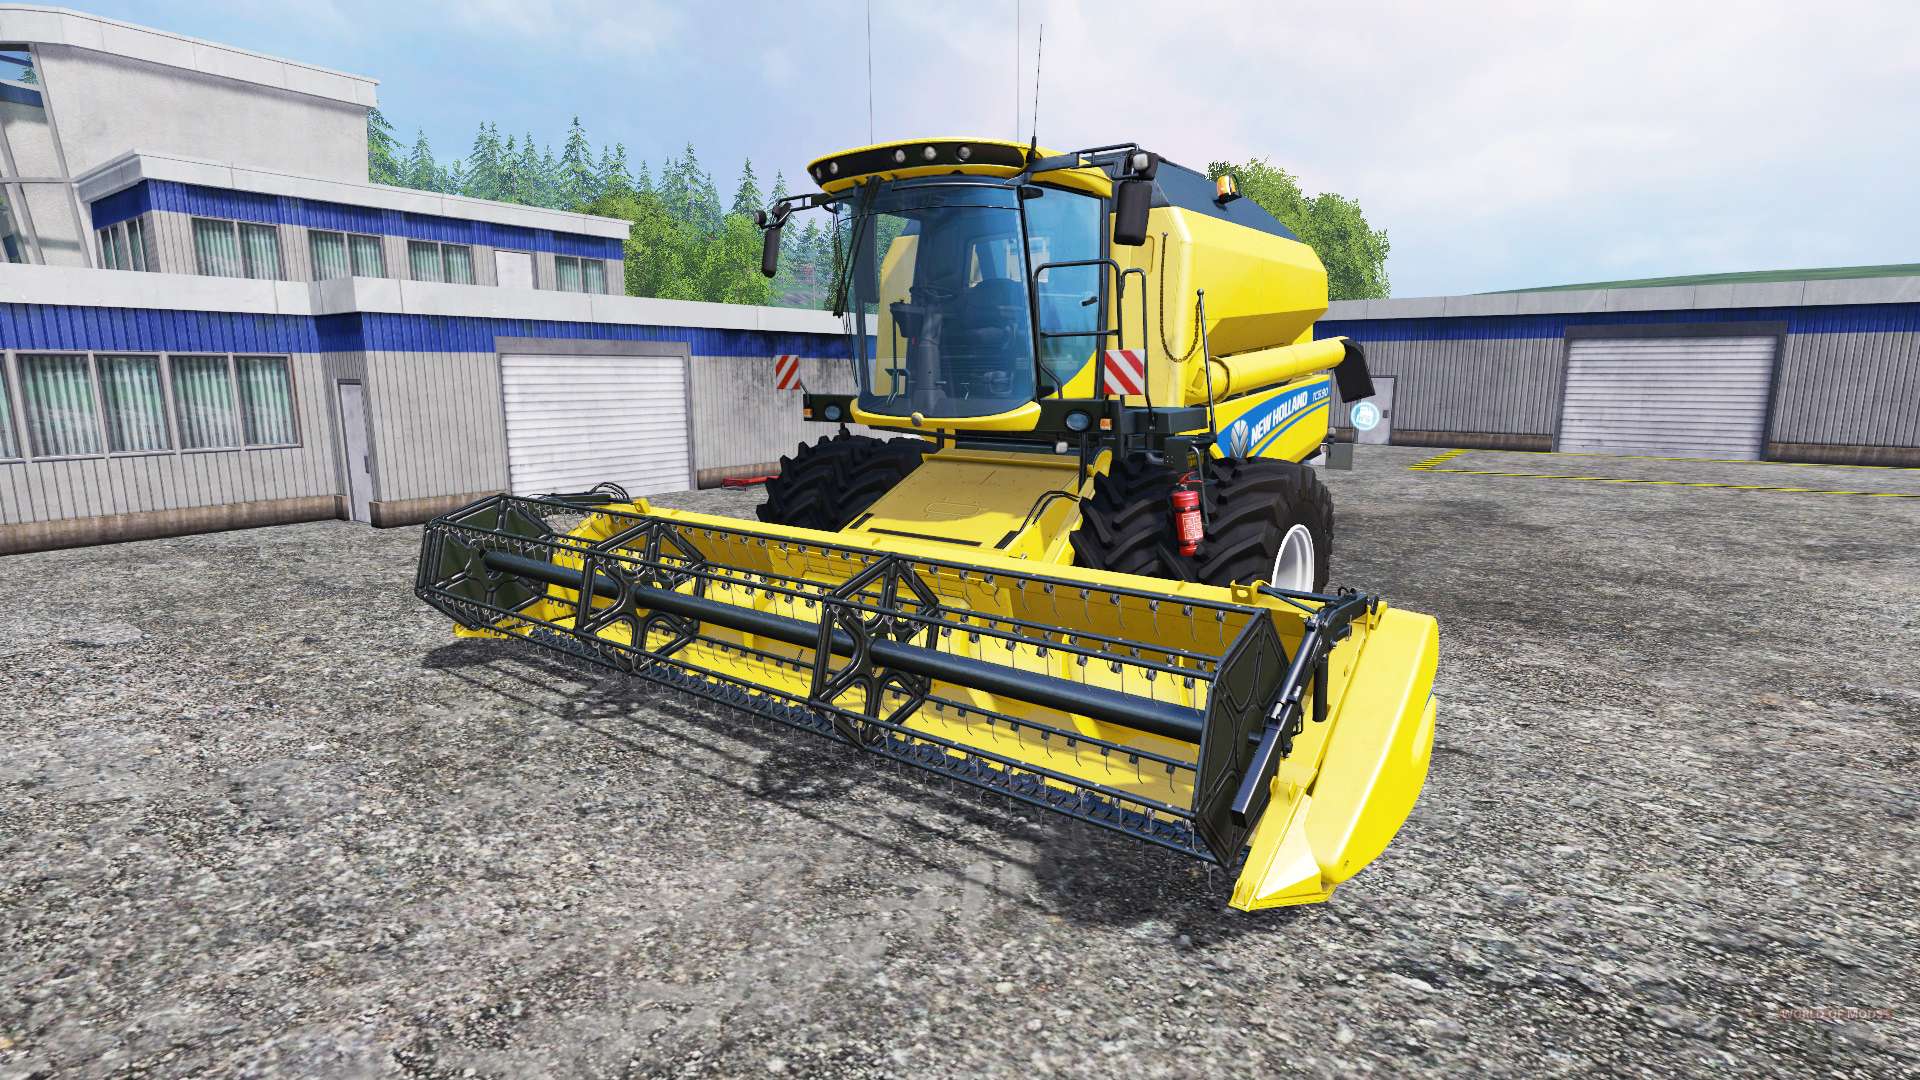 New Holland TC5.90 twin wheels para Farming Simulator 2015